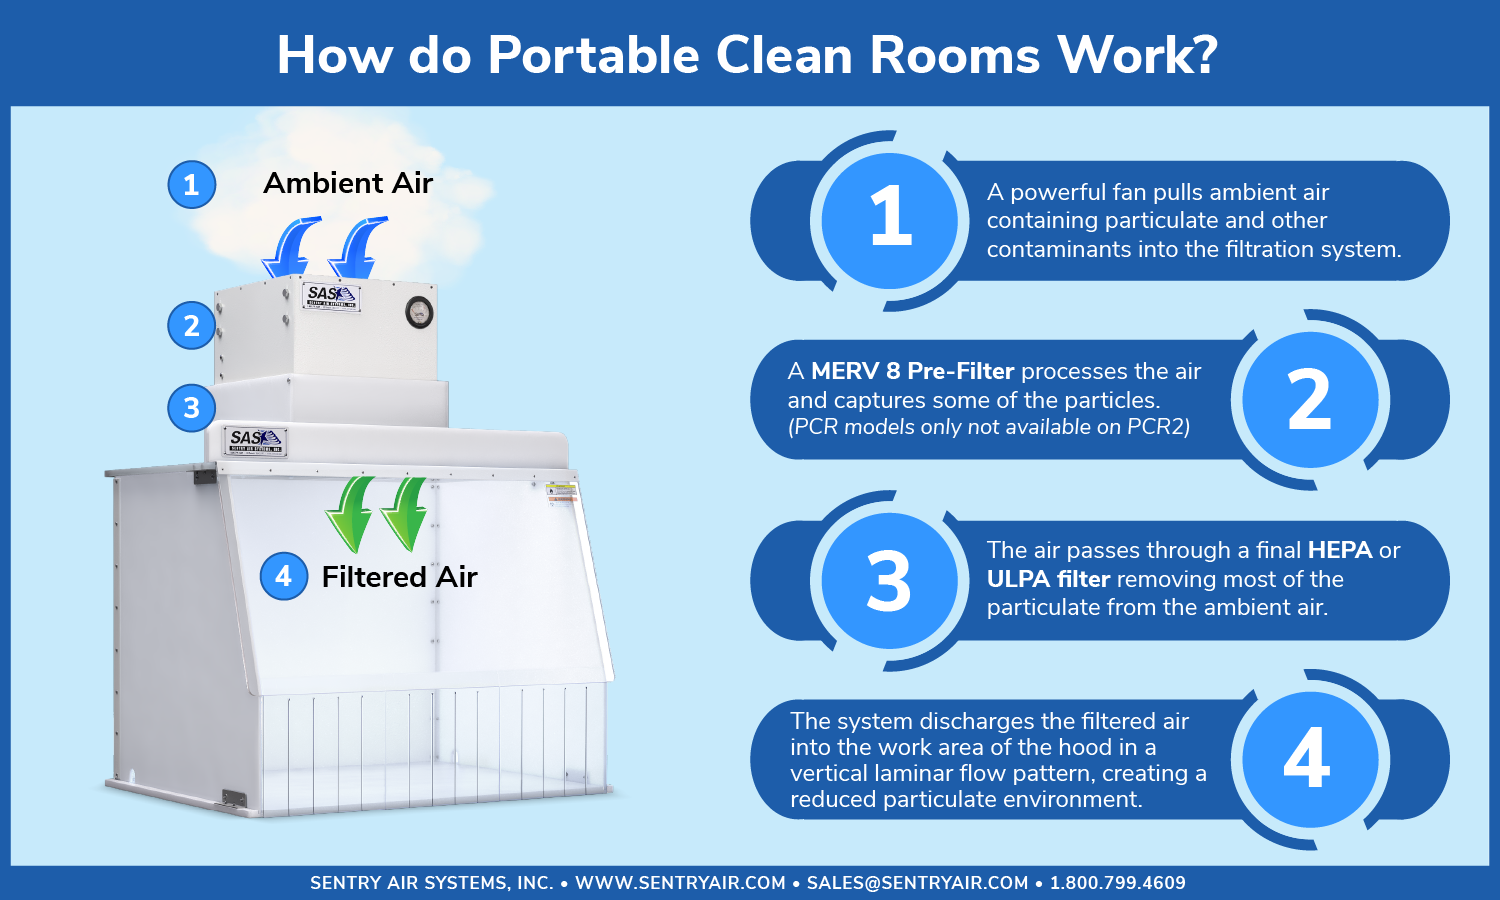 Portable Clean Room